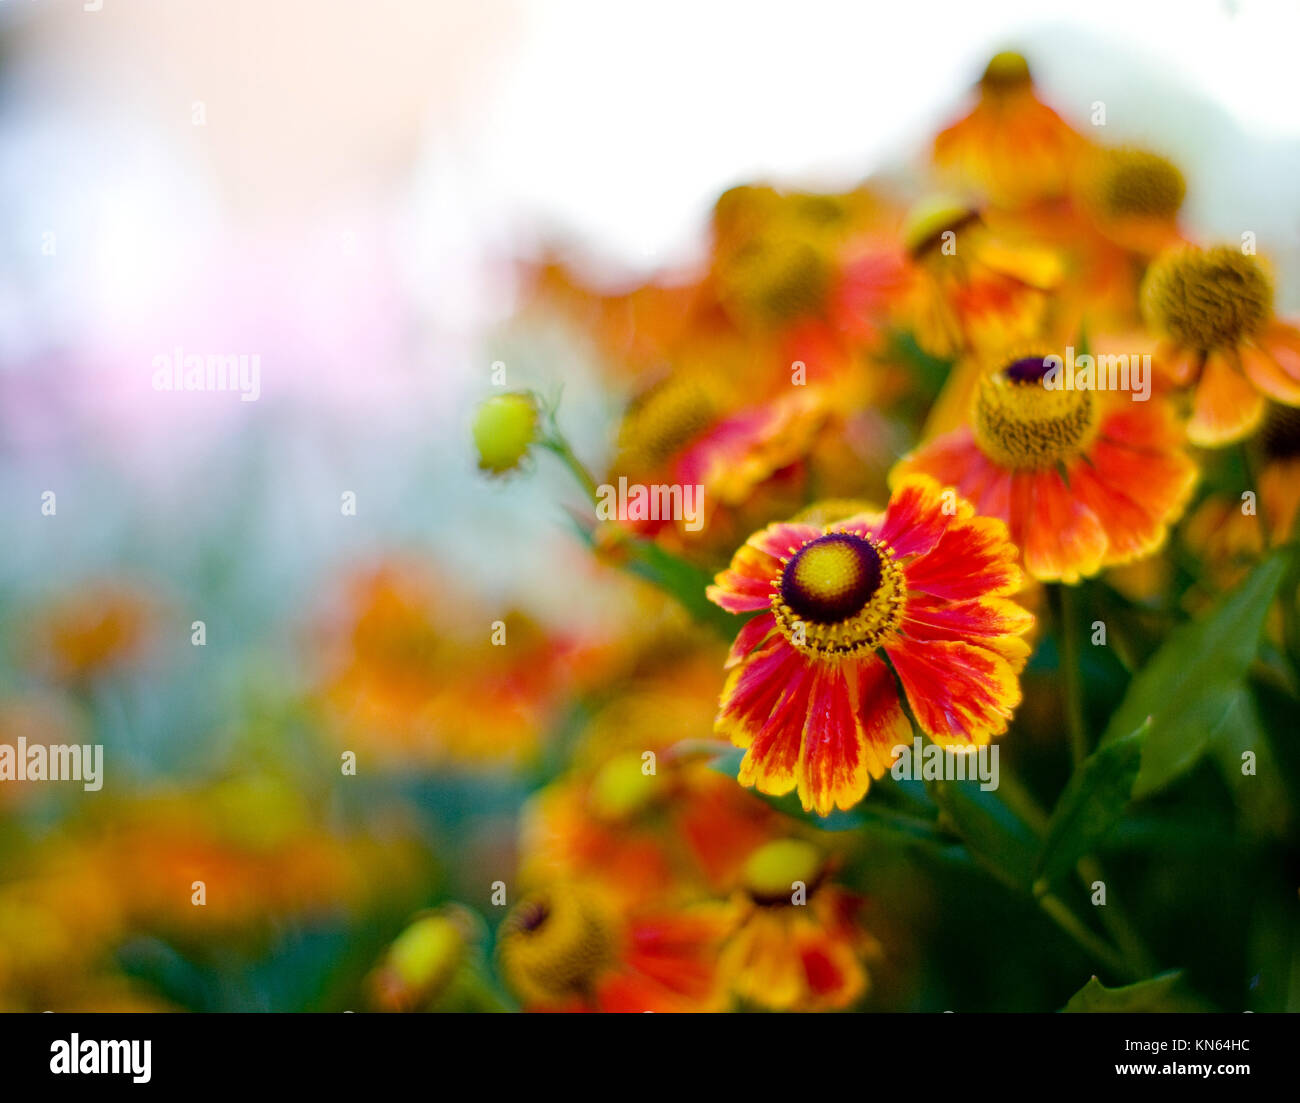 Helenium large group of flowers. Bright orange colors. Gardening Stock Photo